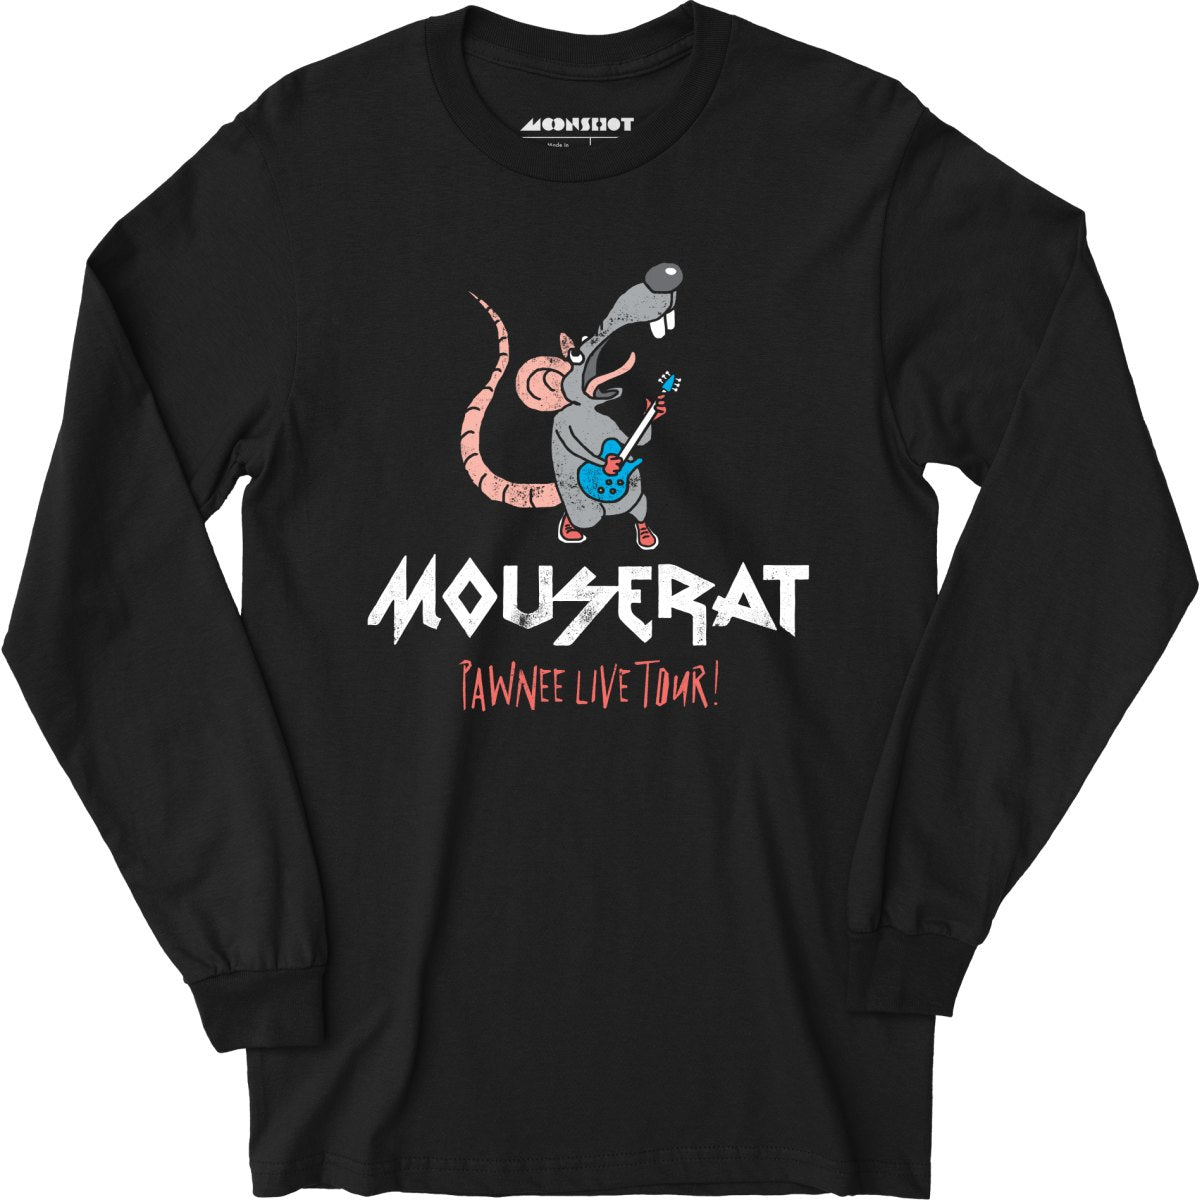 Mouse Rat - Pawnee Live Tour - Long Sleeve T-Shirt